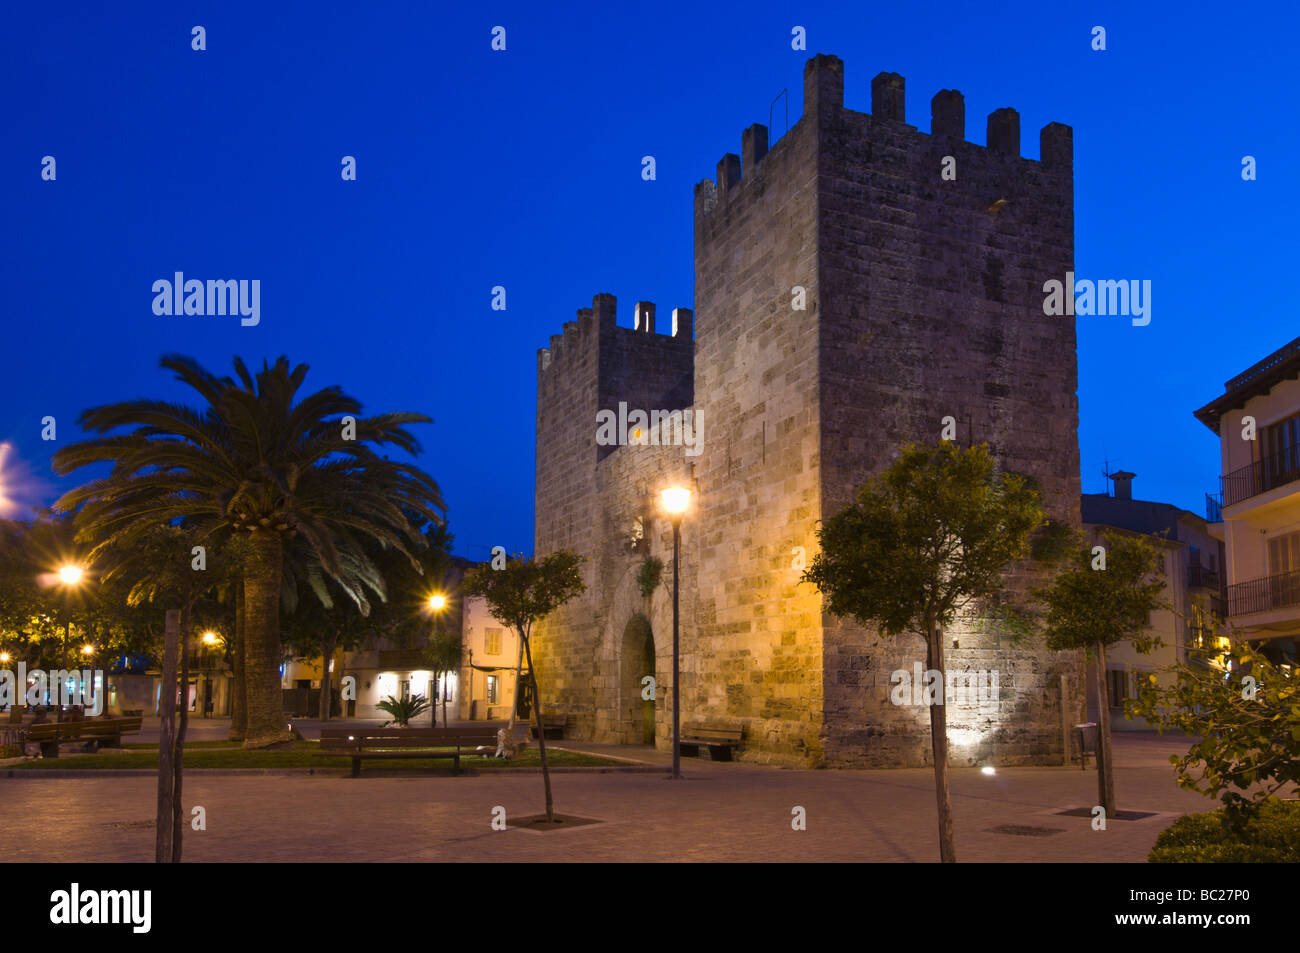 Die Xara Tor - Portal del Moll - Altstadt von Alcudia, Mallorca, Spanien. Stockfoto